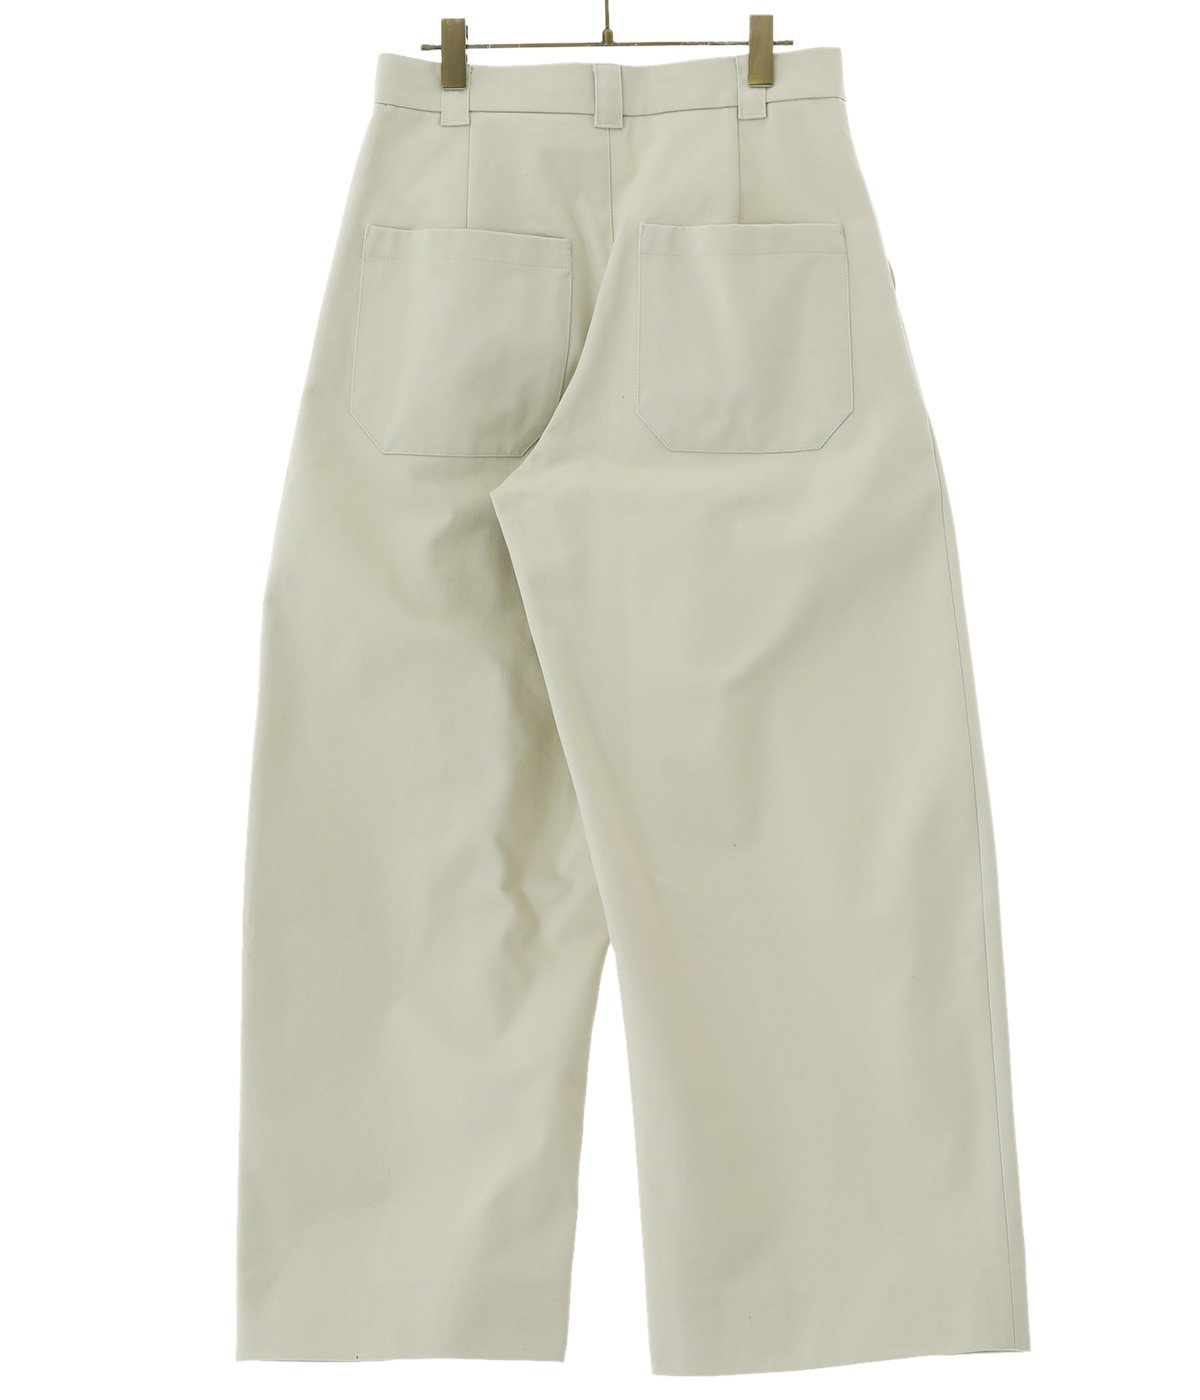 Suiteblanco slacks Brown S discount 70% WOMEN FASHION Trousers Slacks Shorts 